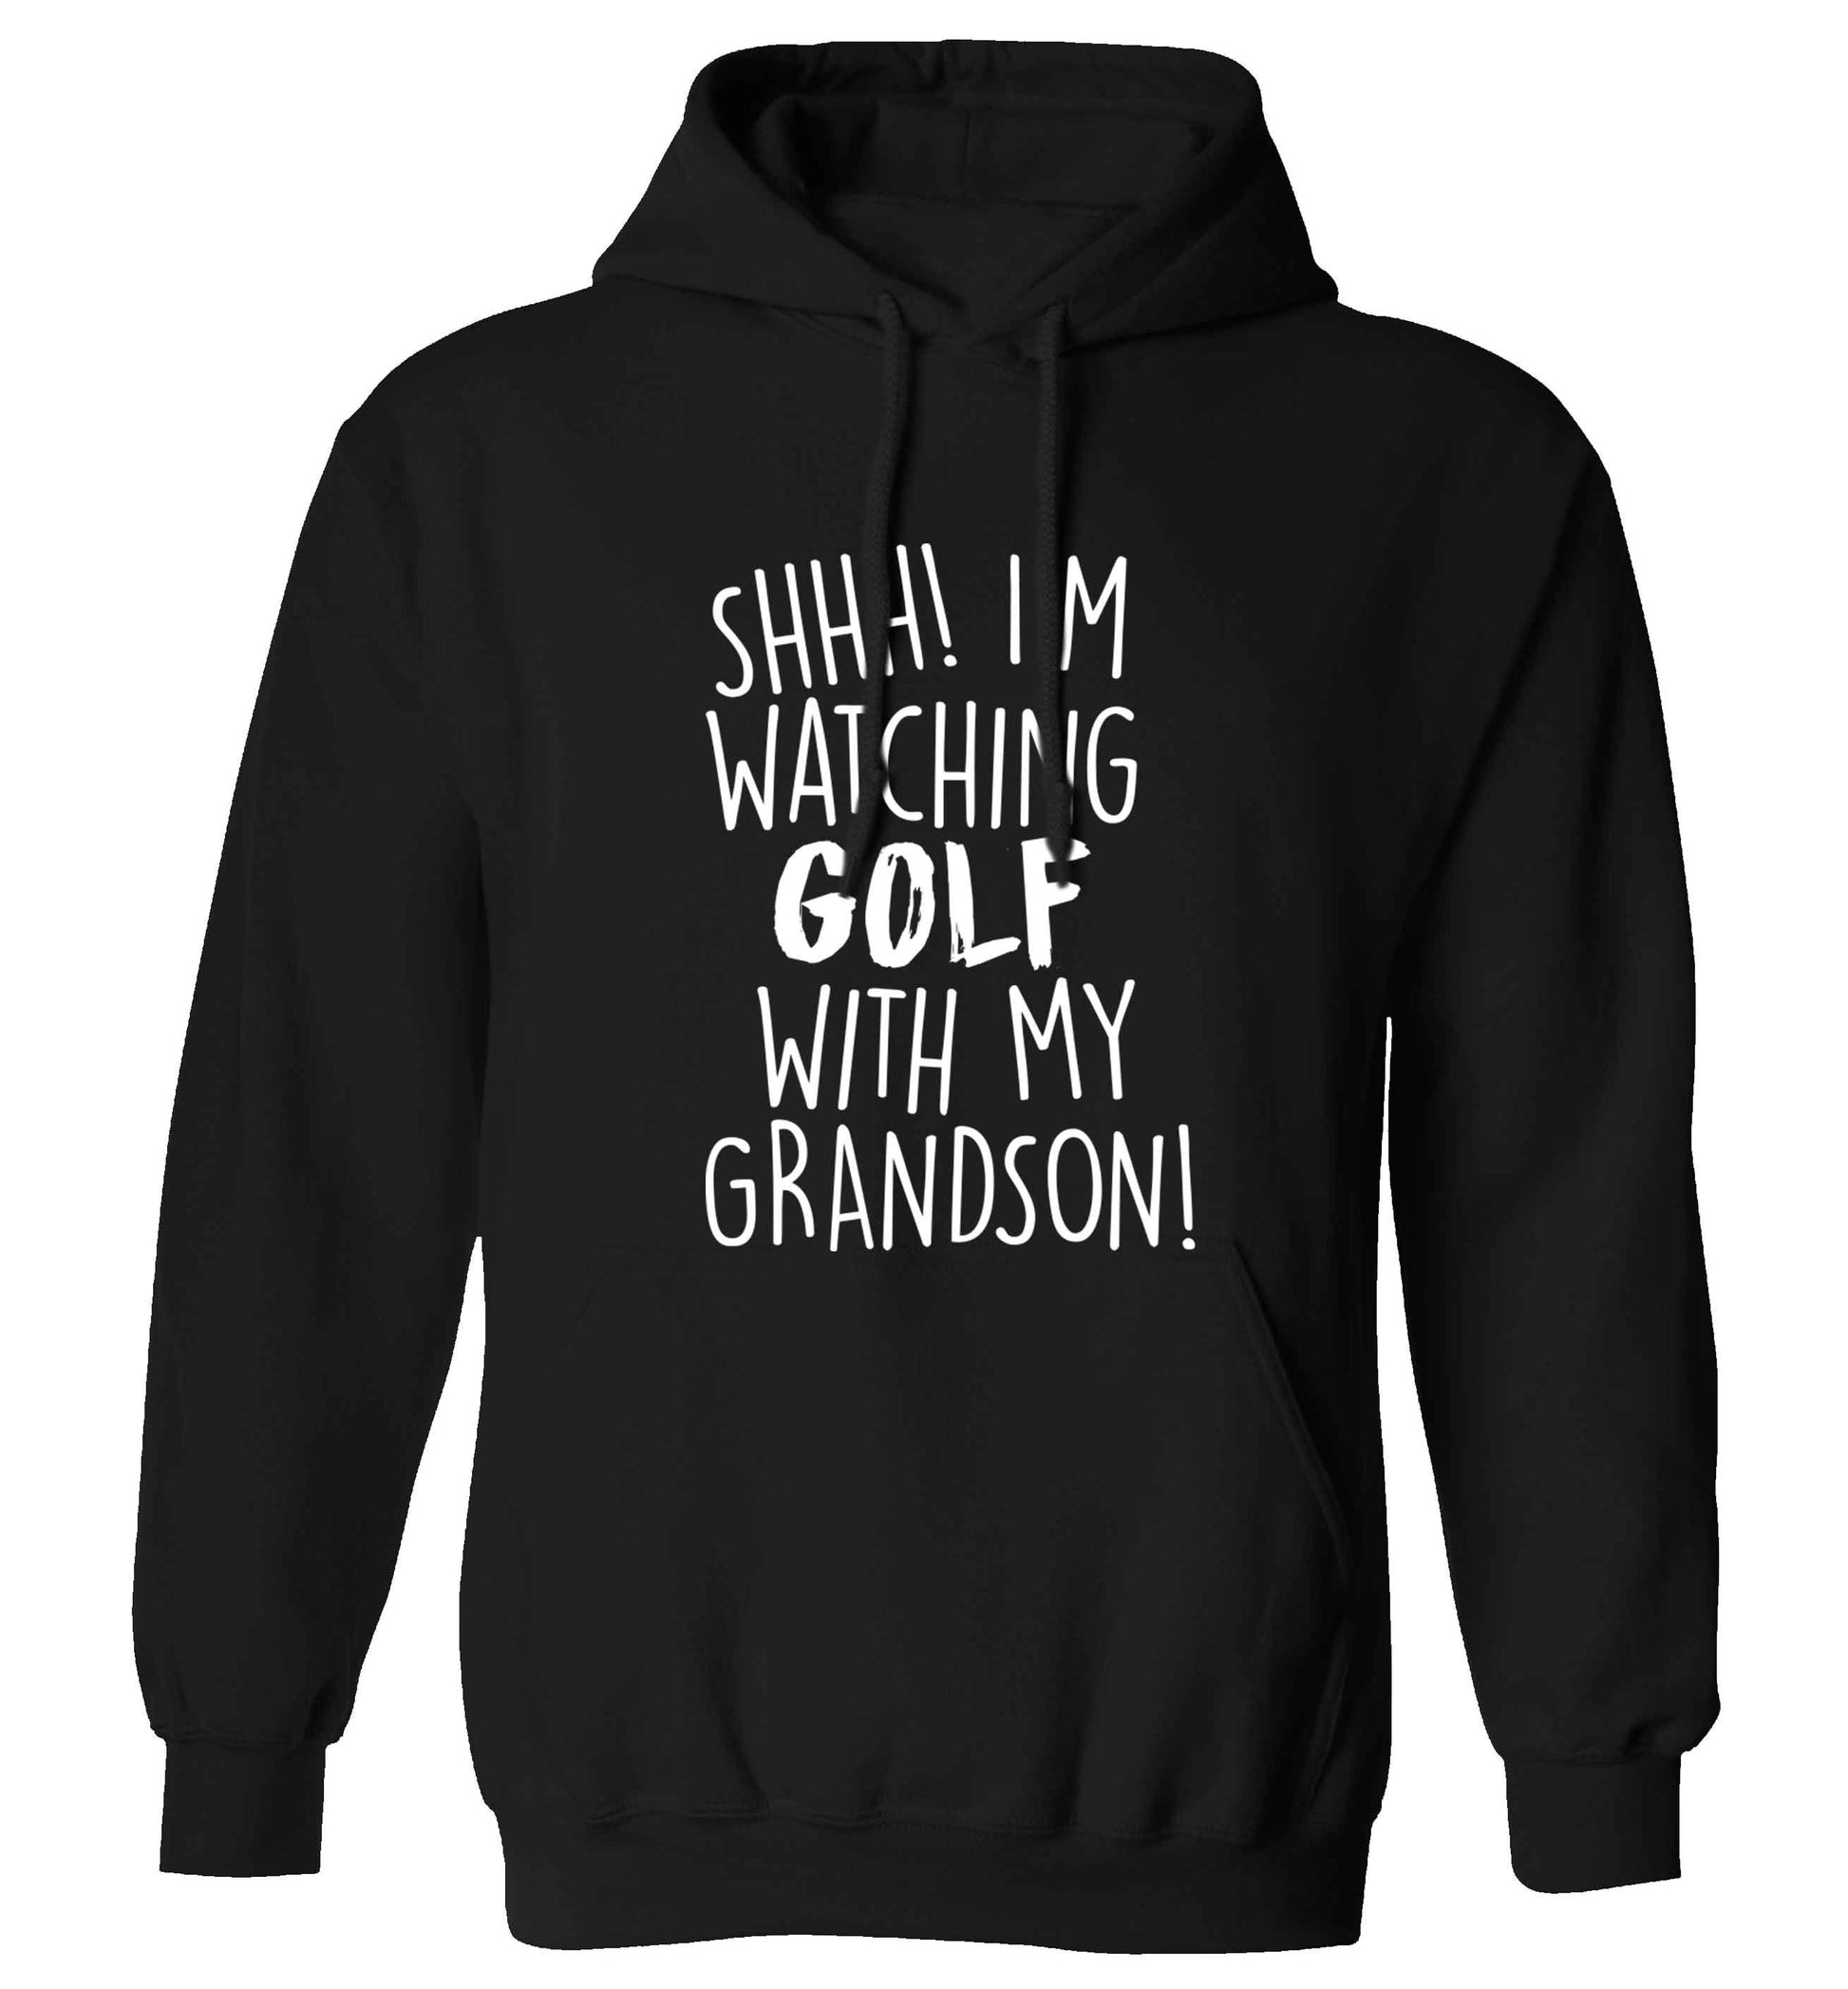 Shh I'm watching golf with my grandsonadults unisex black hoodie 2XL